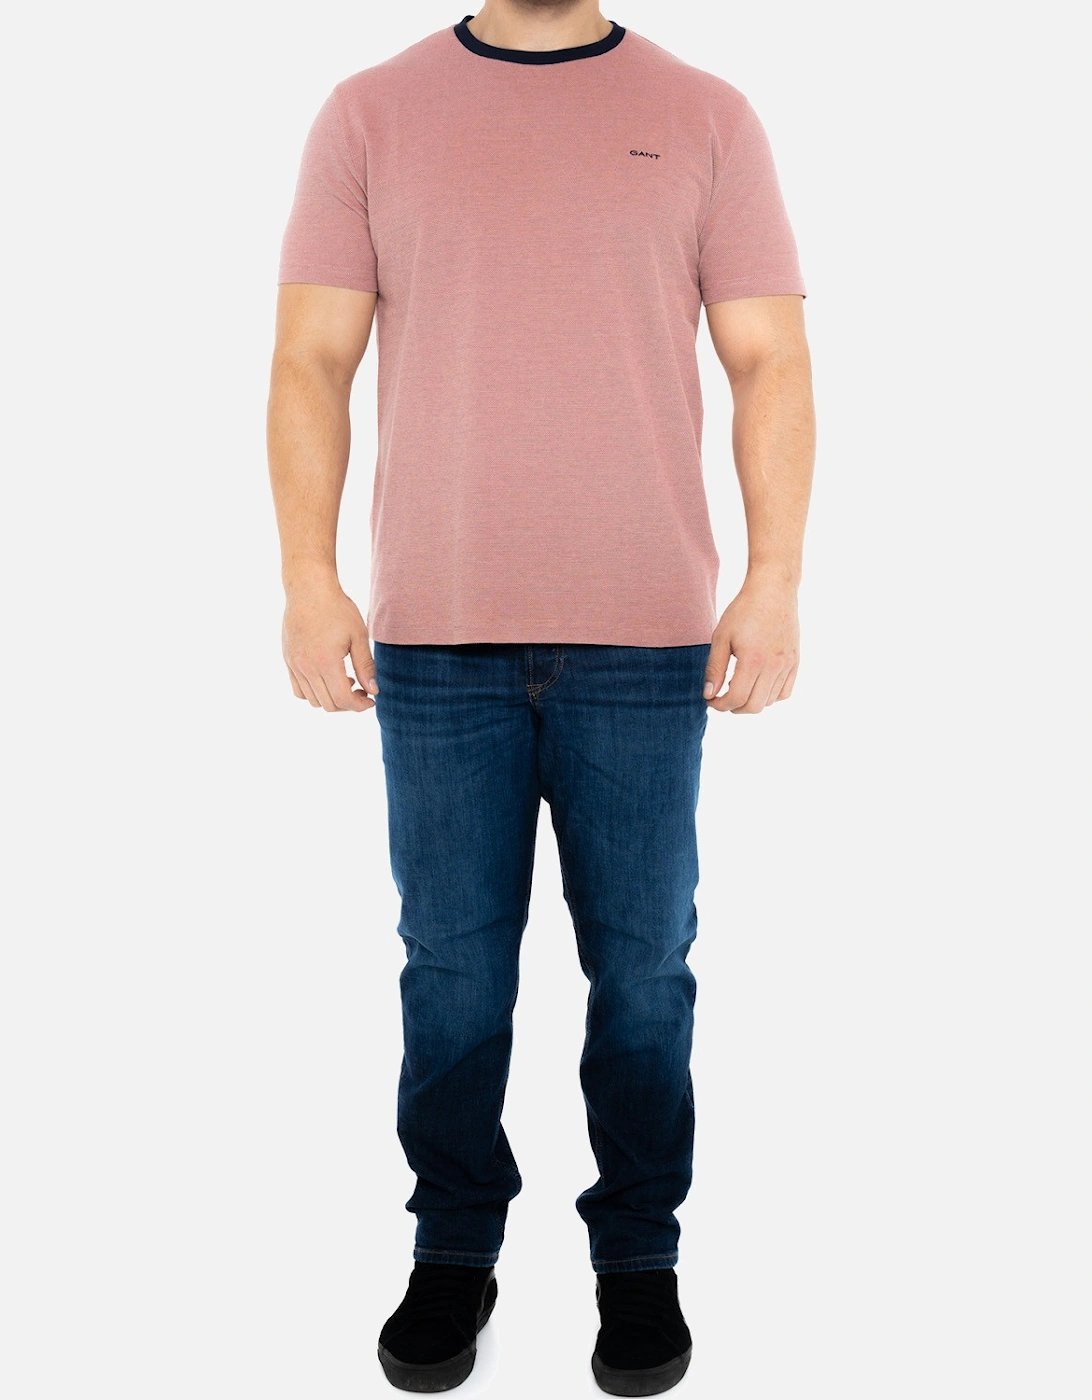 Mens 4-Col Oxford T-Shirt (Pink)